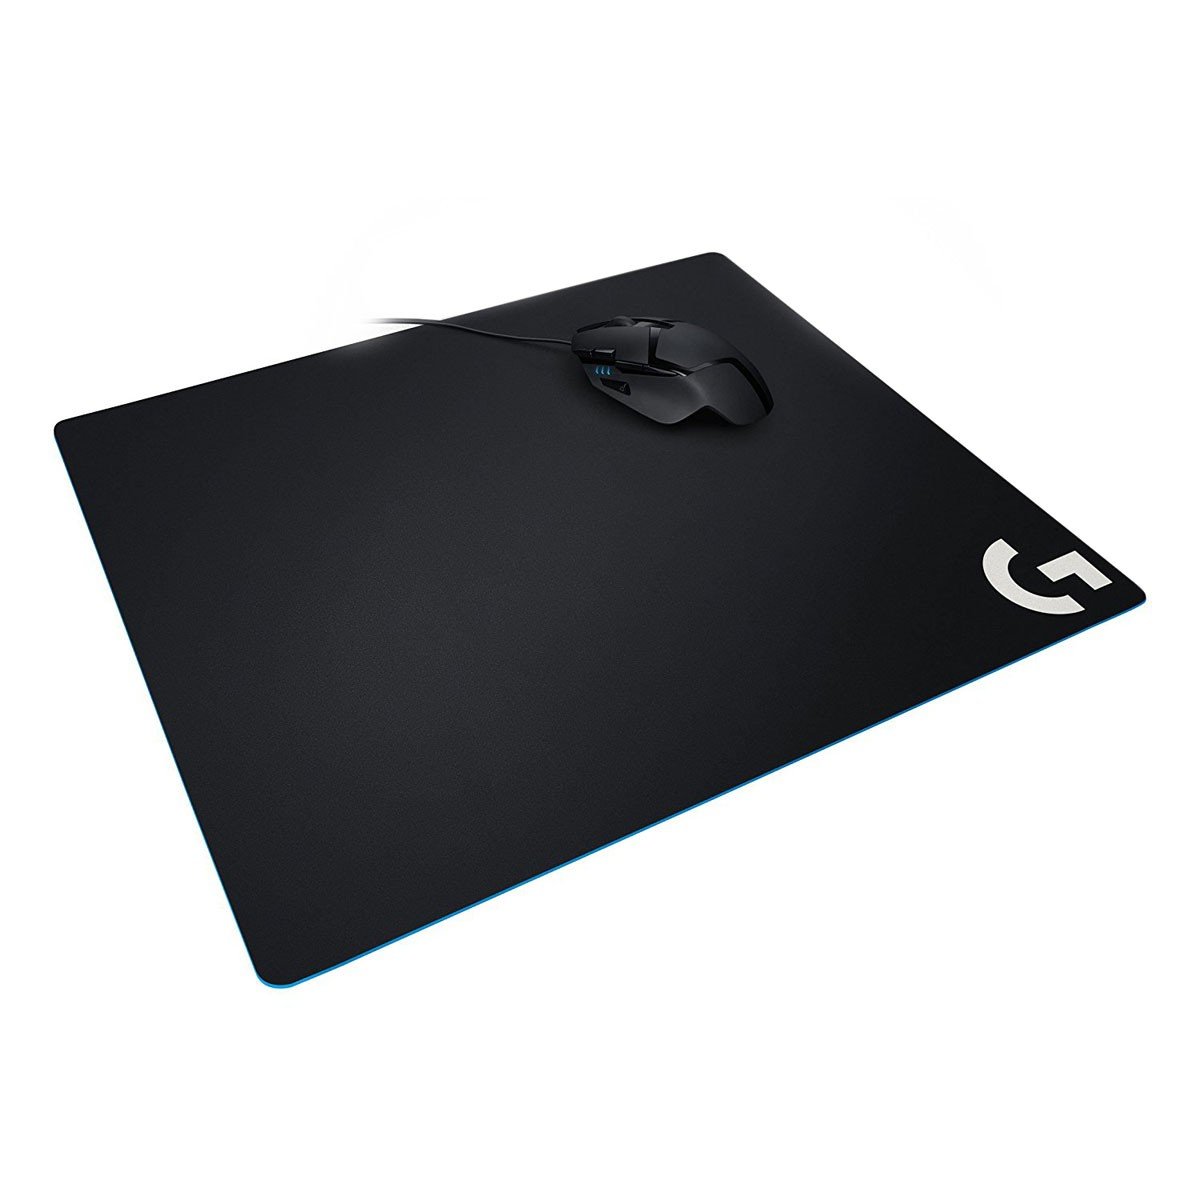 Osta Logitech G640 Cloth Gaming Mouse Pad Ml Toimituskulut